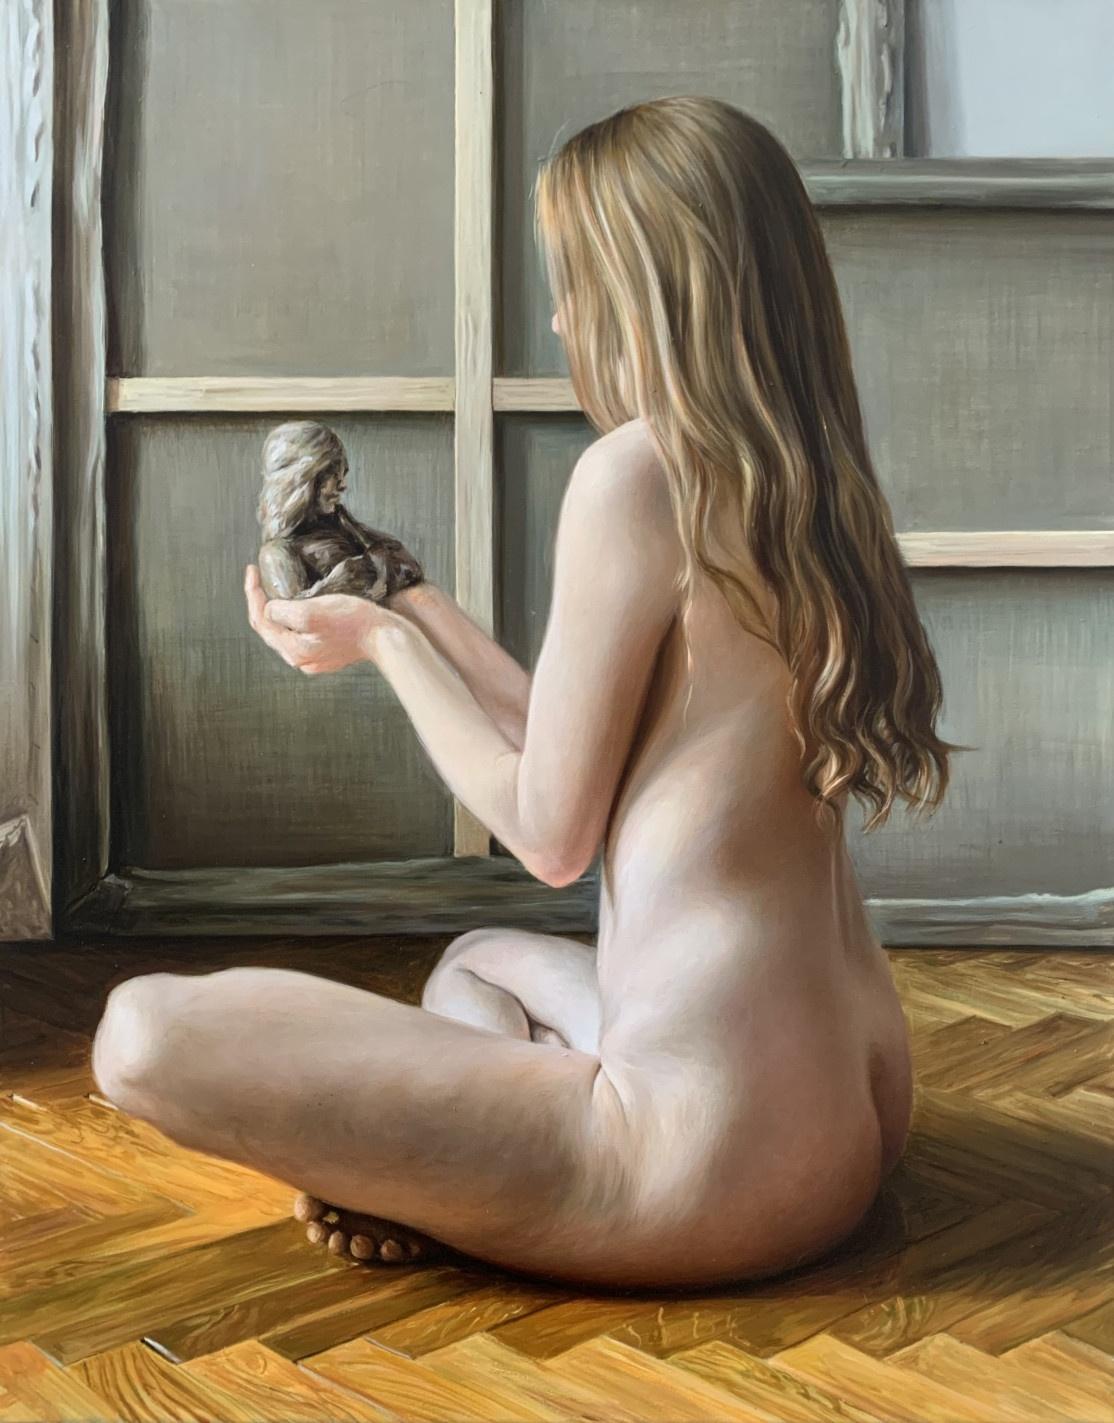 Agnieszka Staak-Janczarska Nude Painting - Untitled. Realistic figurative oil painting, Nude, Young Polish artist